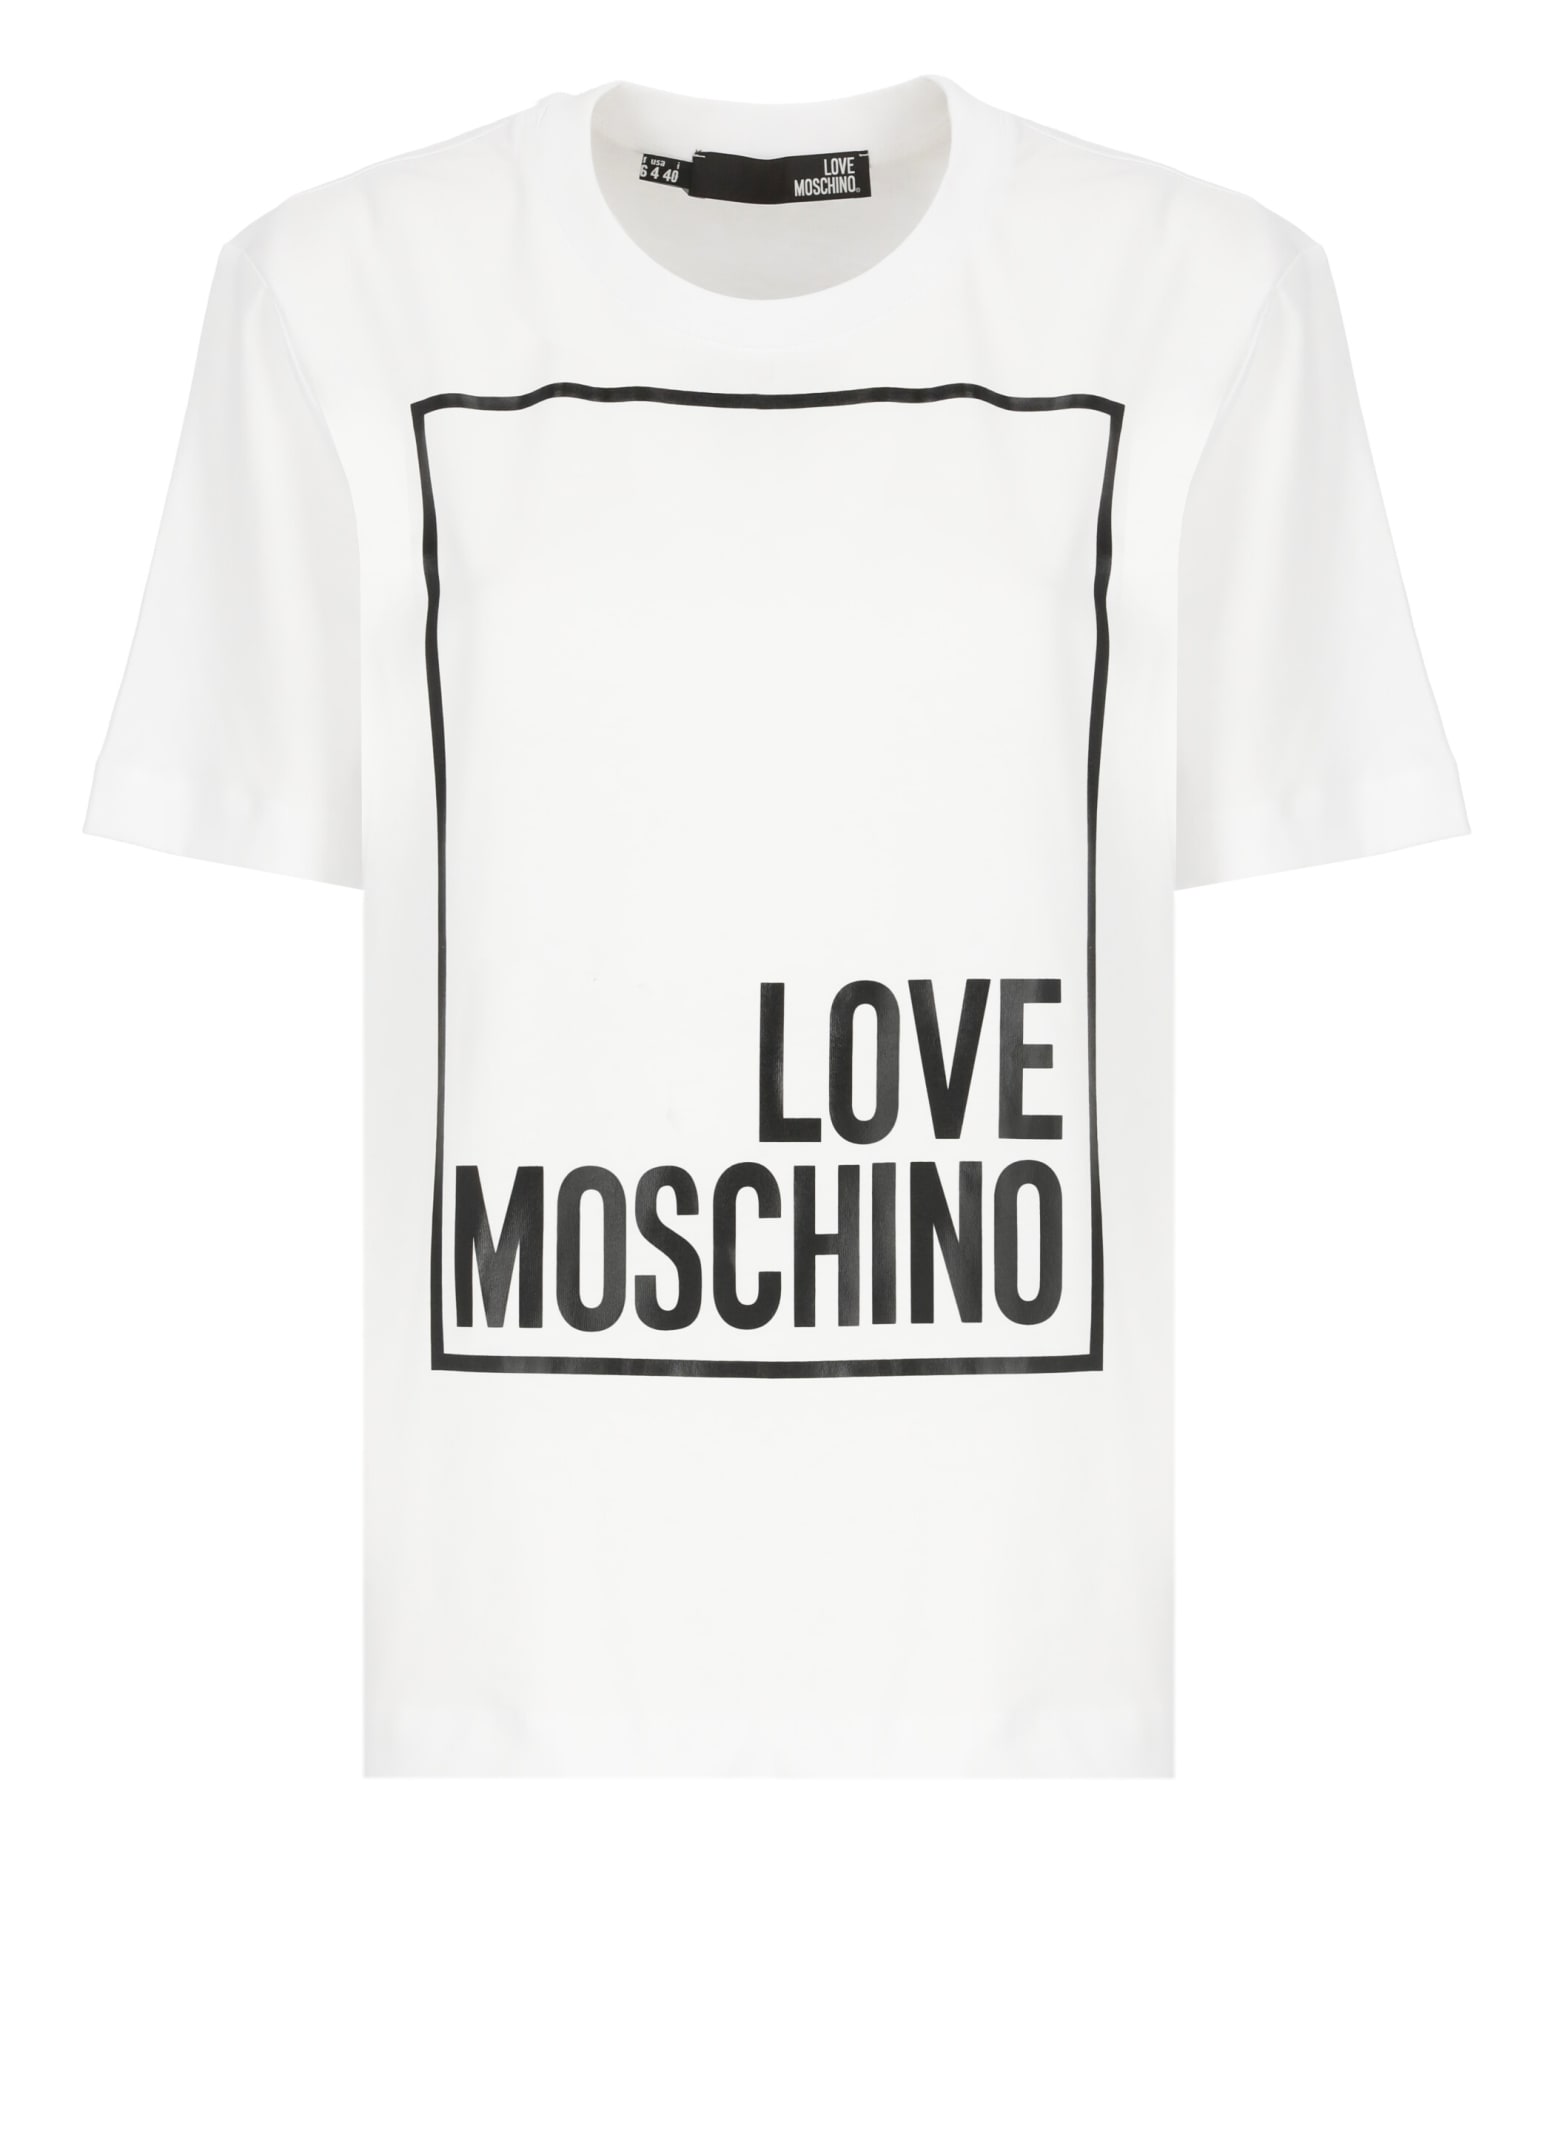 LOVE MOSCHINO T-SHIRT WITH LOGO